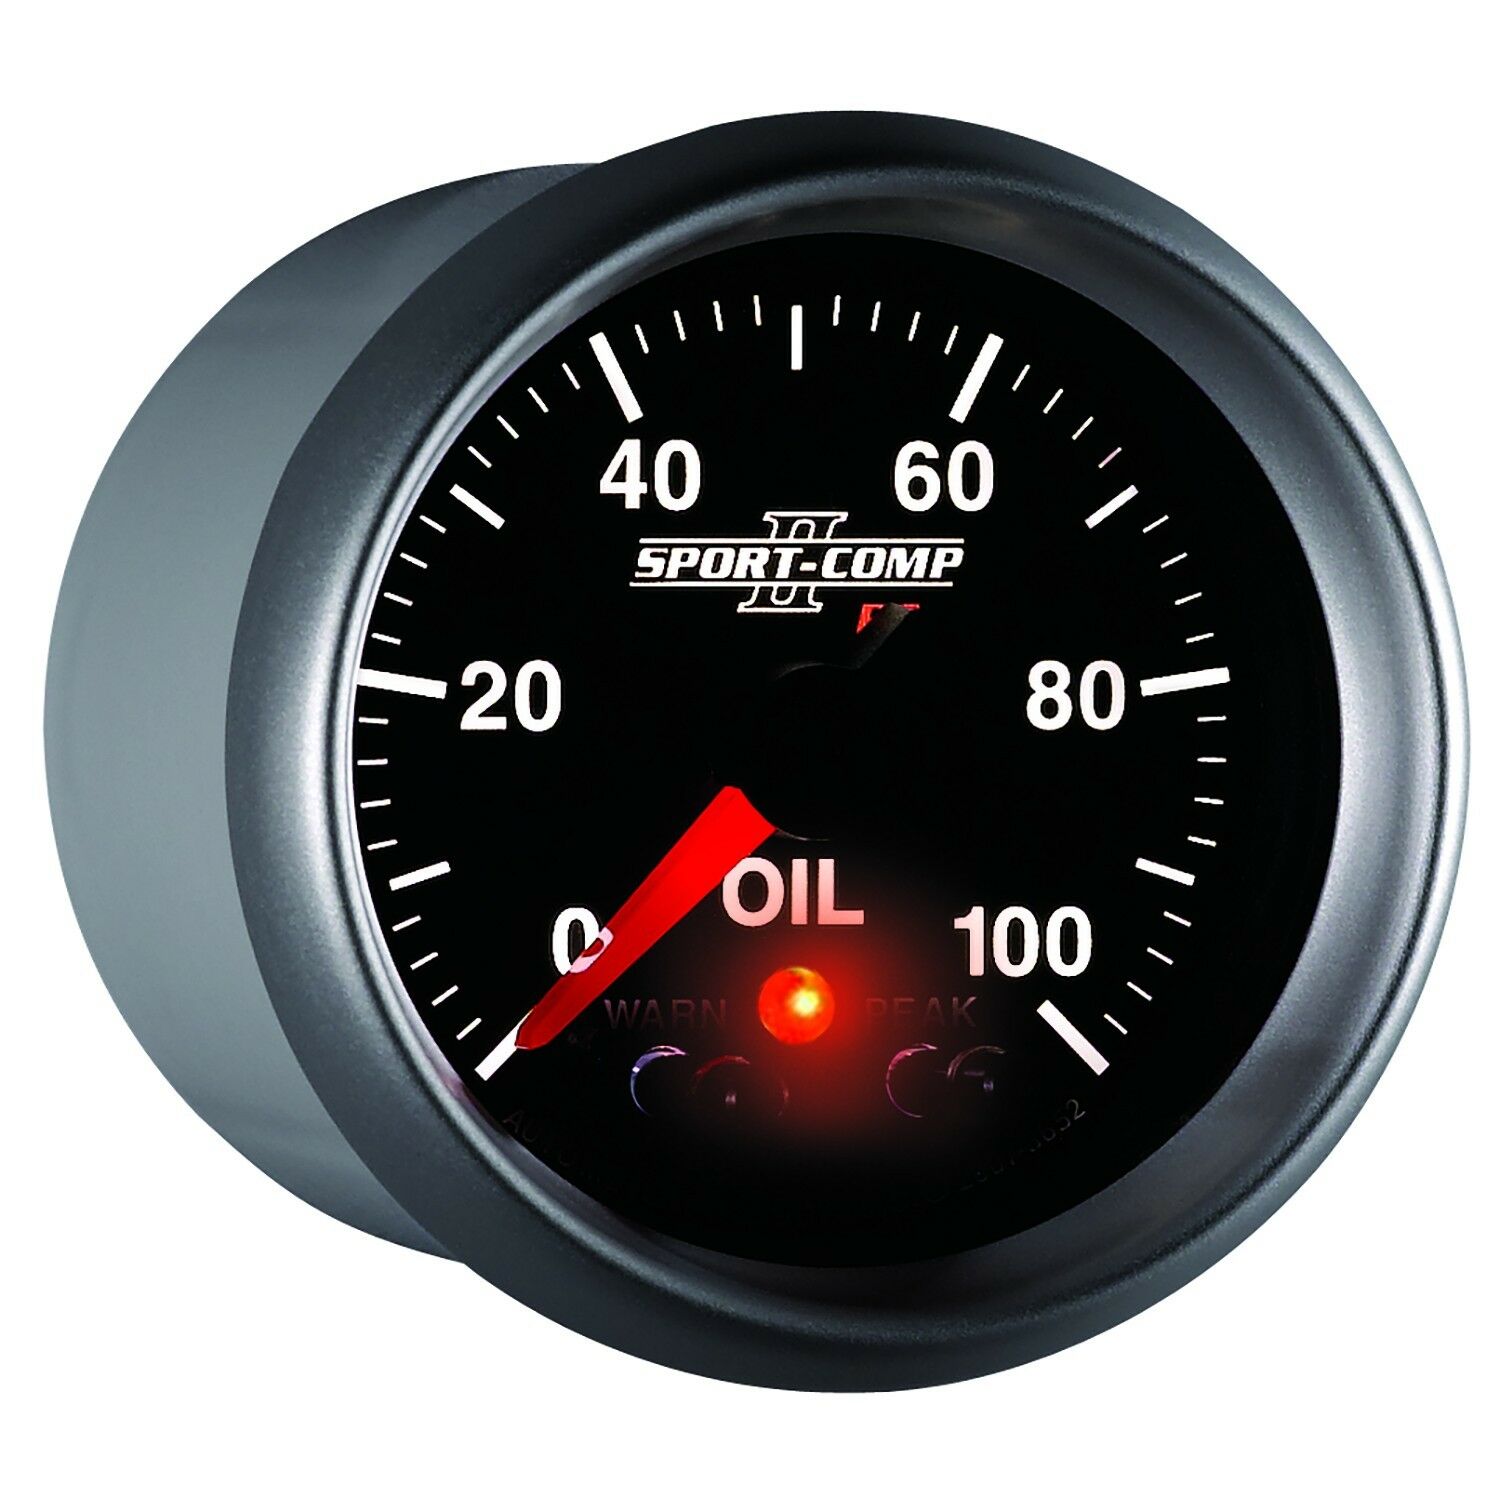 AutoMeter Sport-Comp II Pro-Control Analog Oil Pressure Gauge - 3652